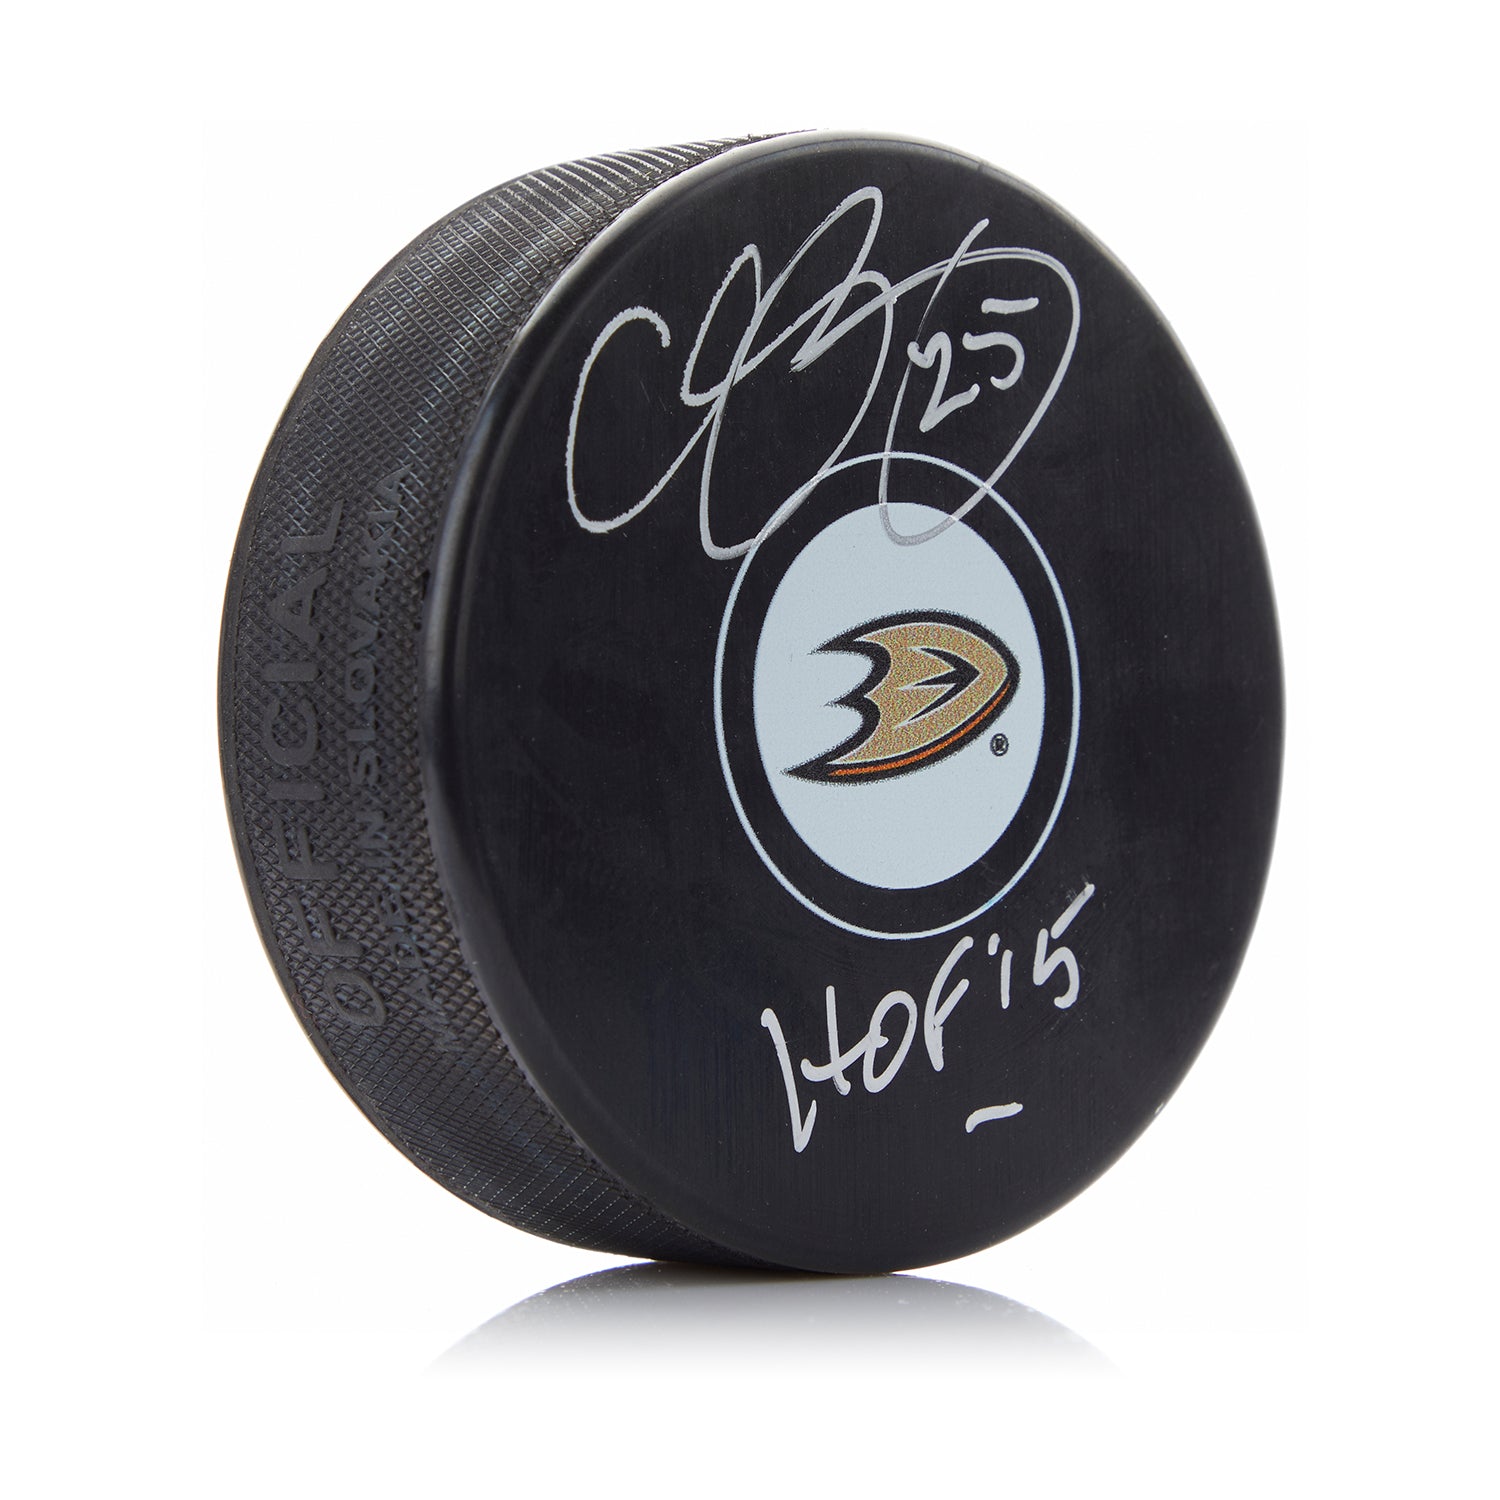 Chris Pronger Autographed Anaheim Ducks Puck with HOF Note